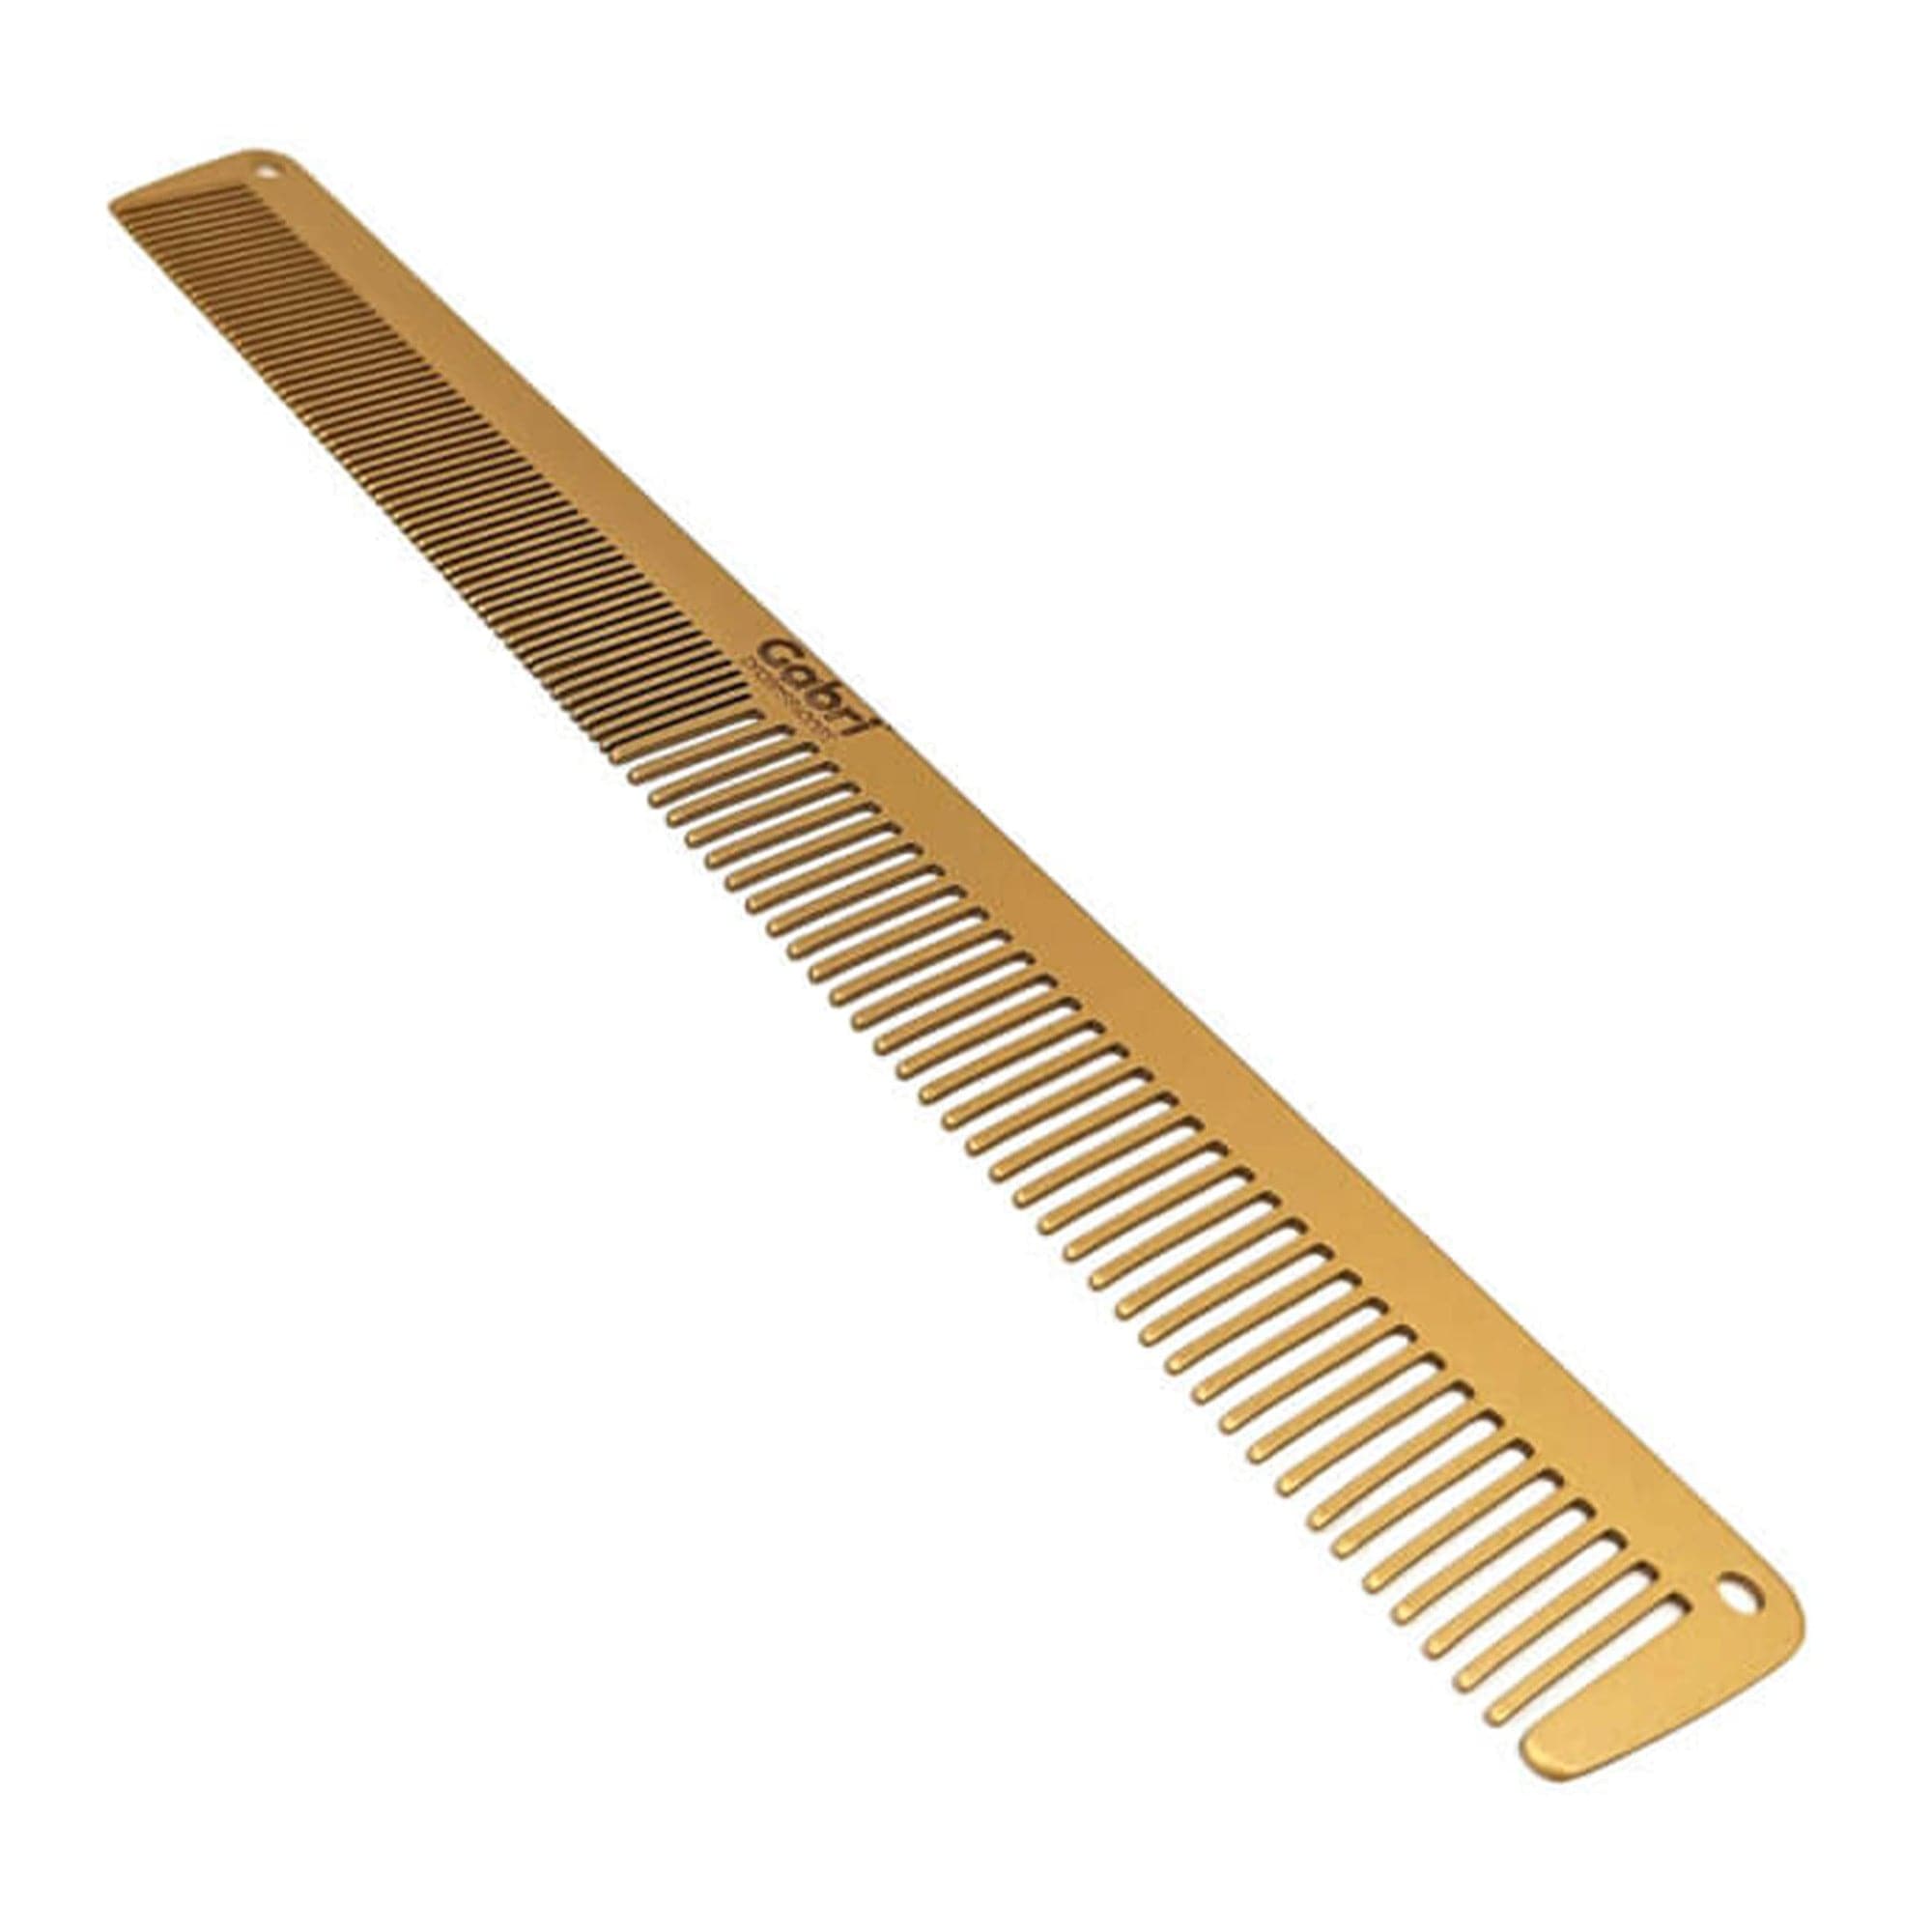 Gabri - Barberology Clipper Comb & Hair Cutting Comb Ultra Thin Gold Metal